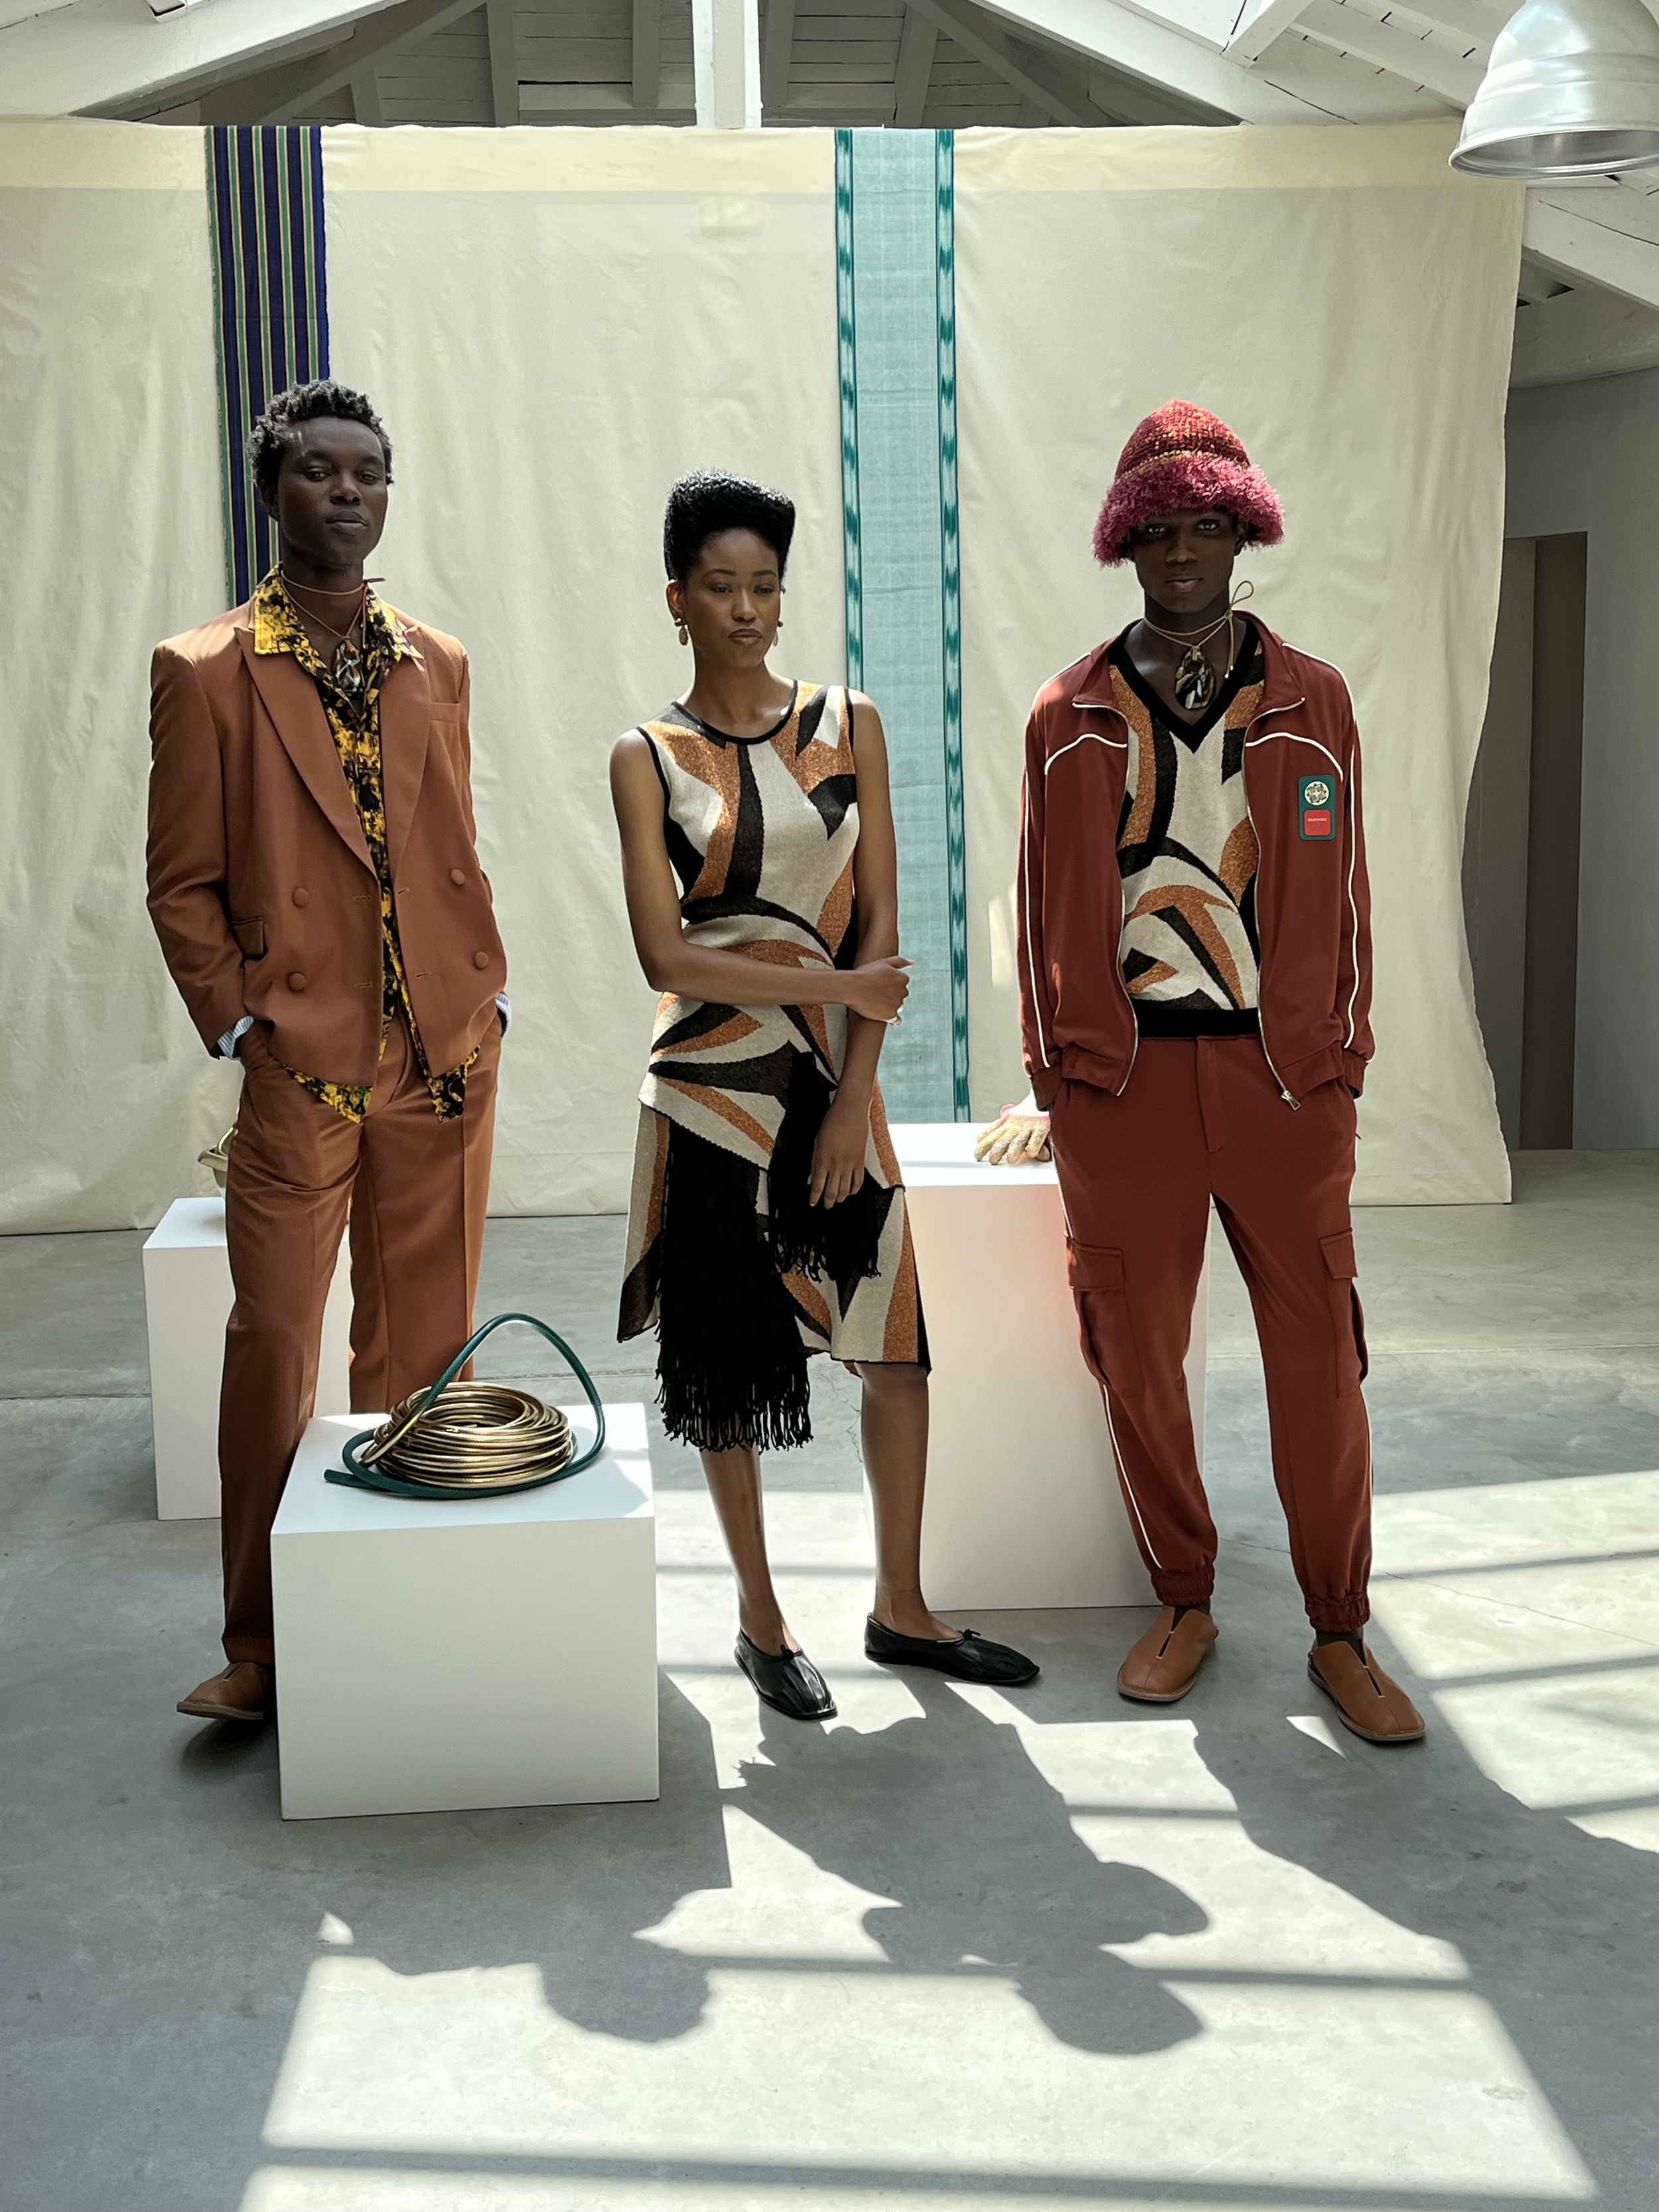 South African Brand Lukhanyo Mdingi Presents The Burkina